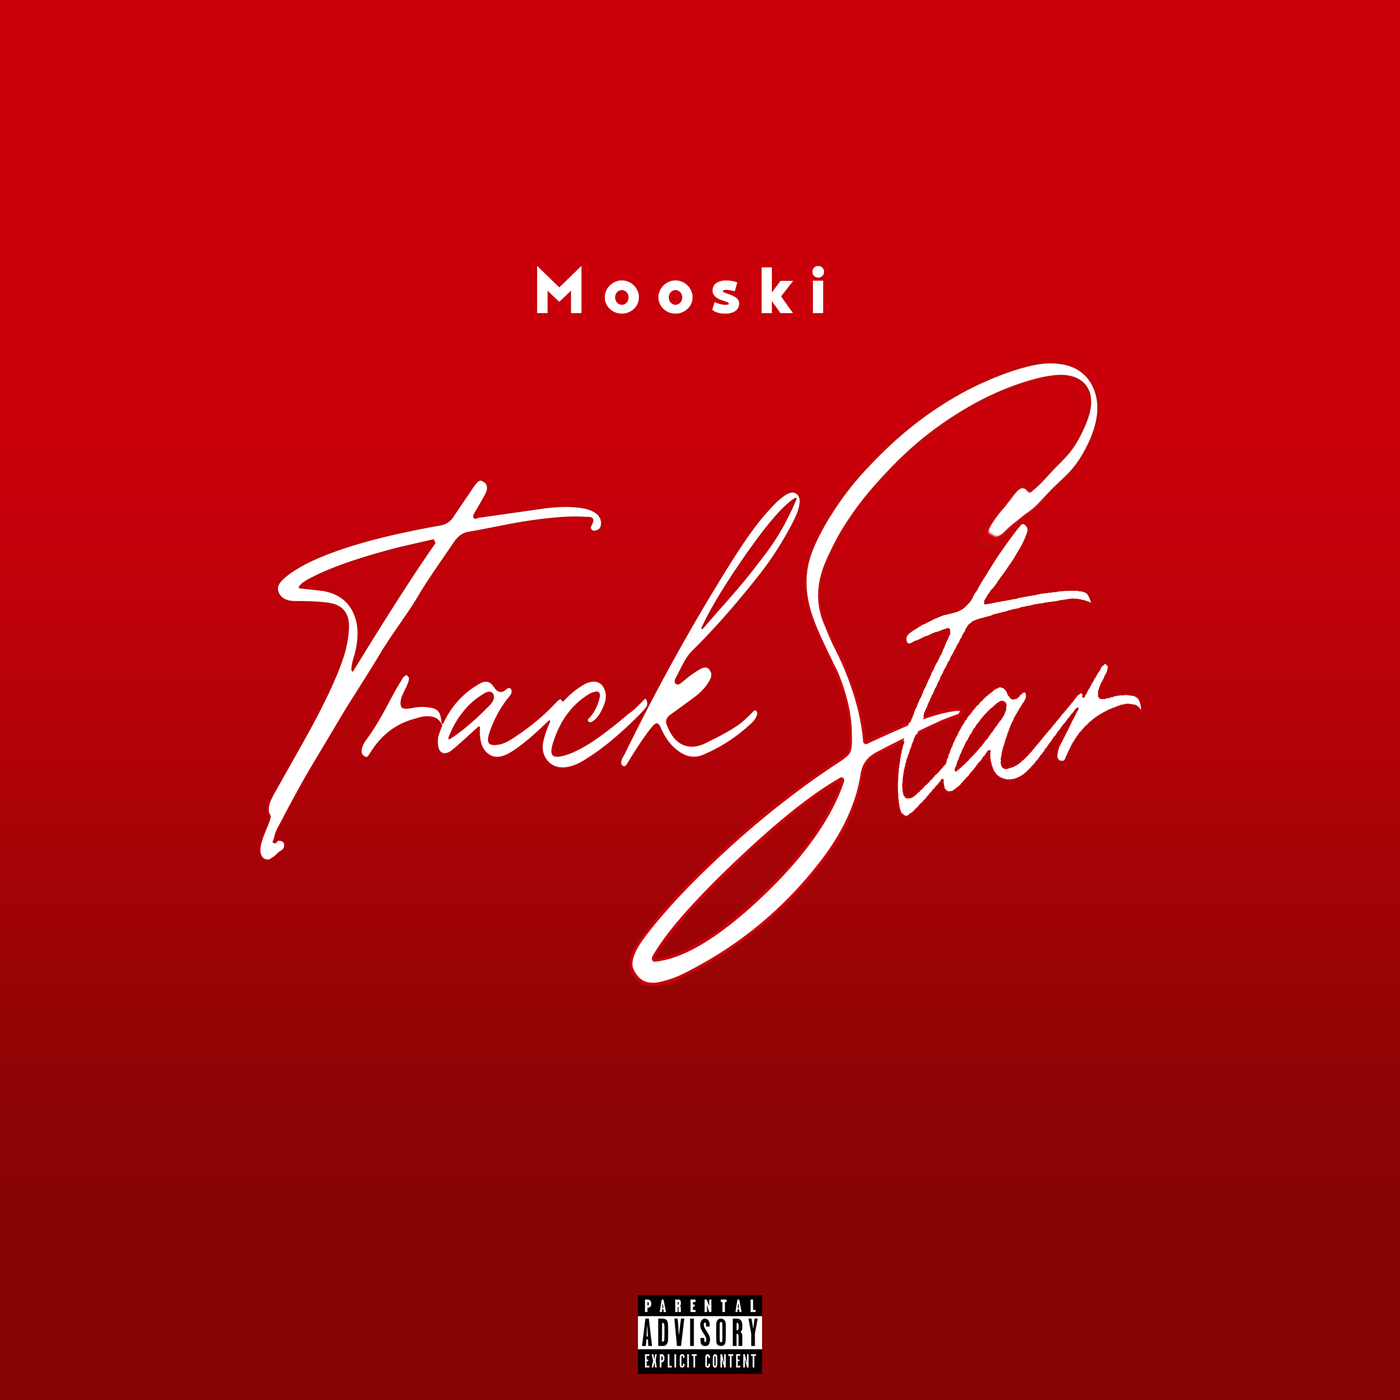 डाउनलोड करा Mooski - Track Star